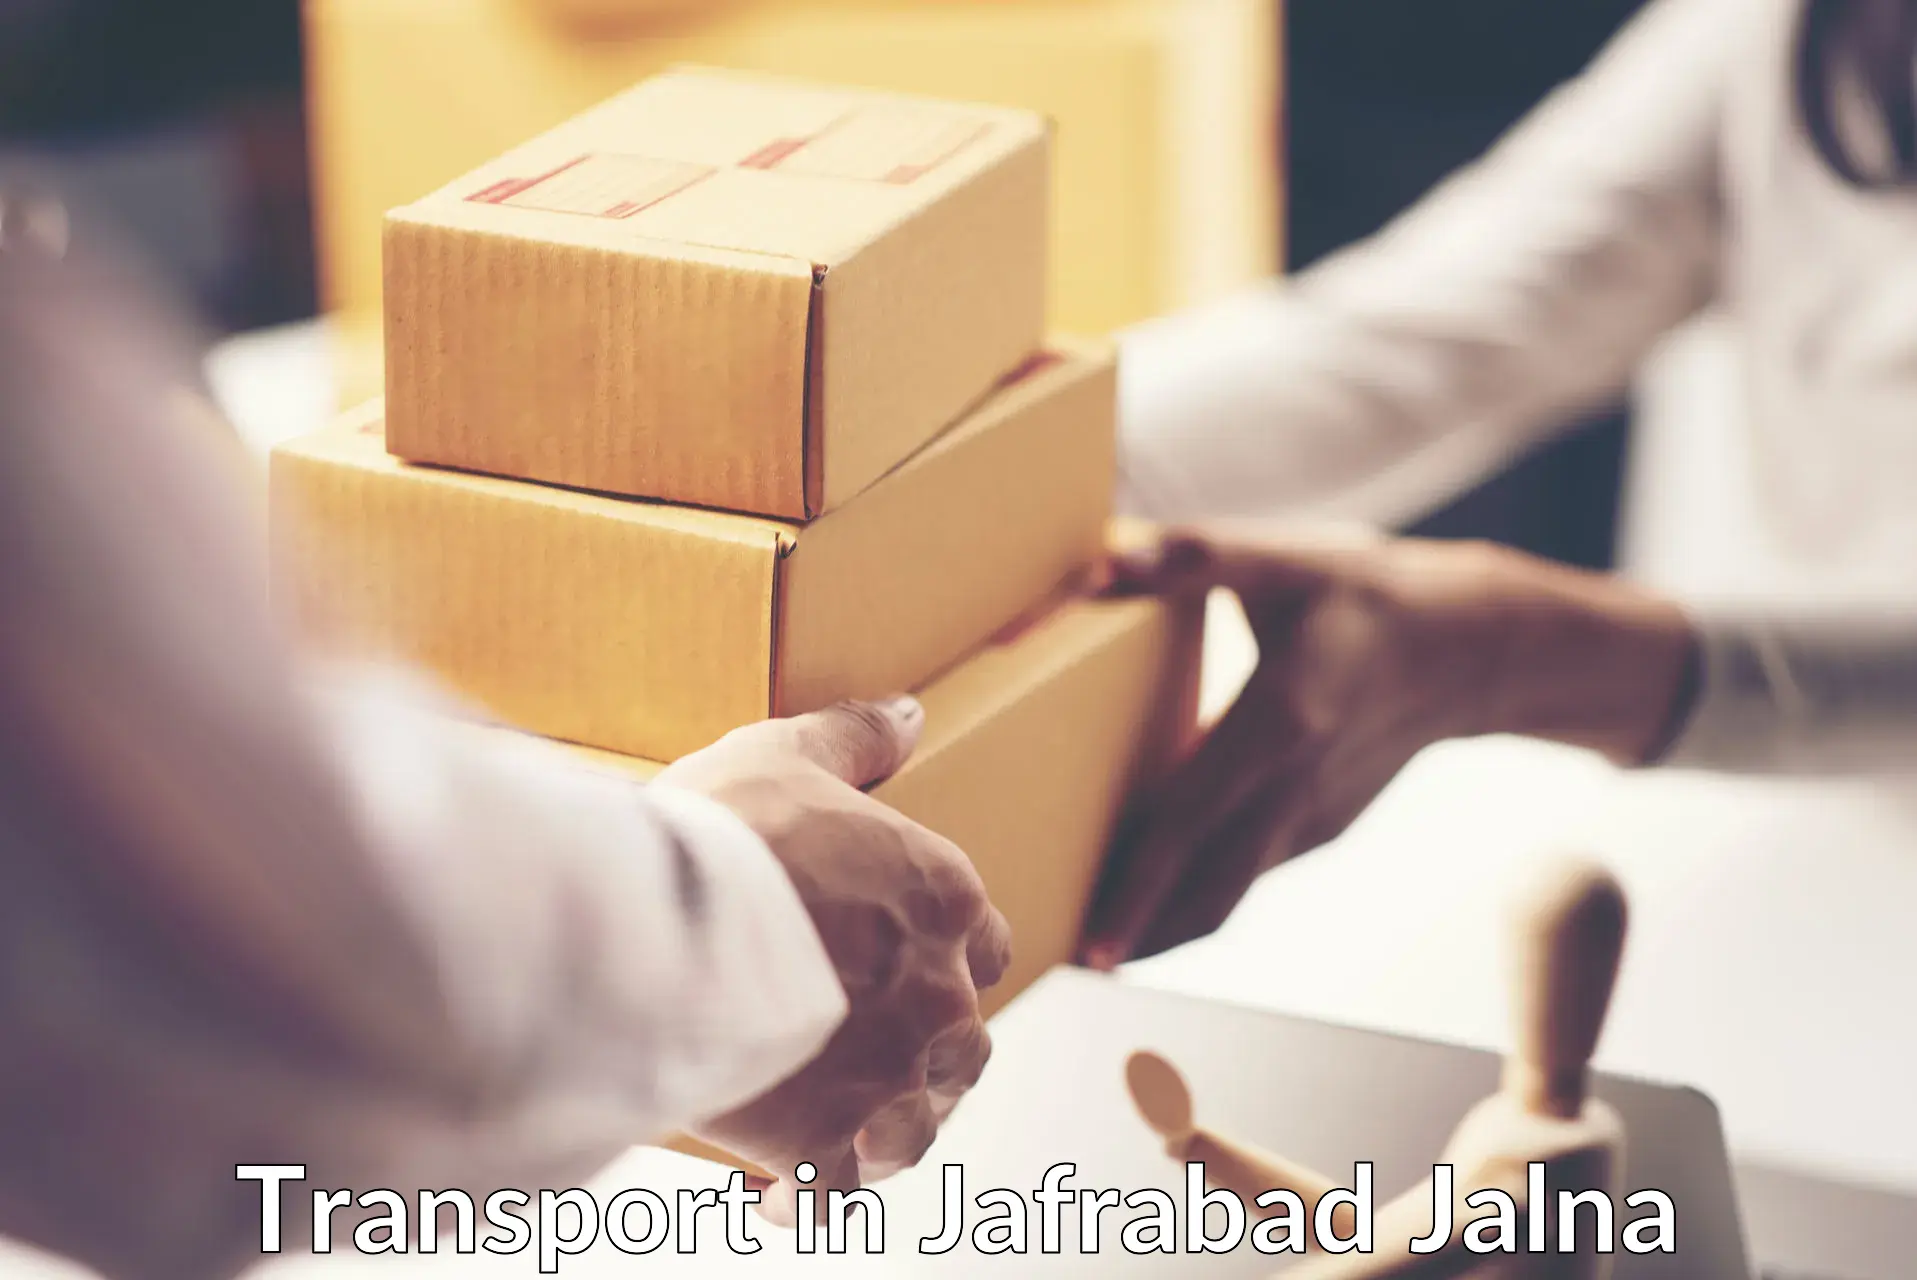 Delivery service in Jafrabad Jalna